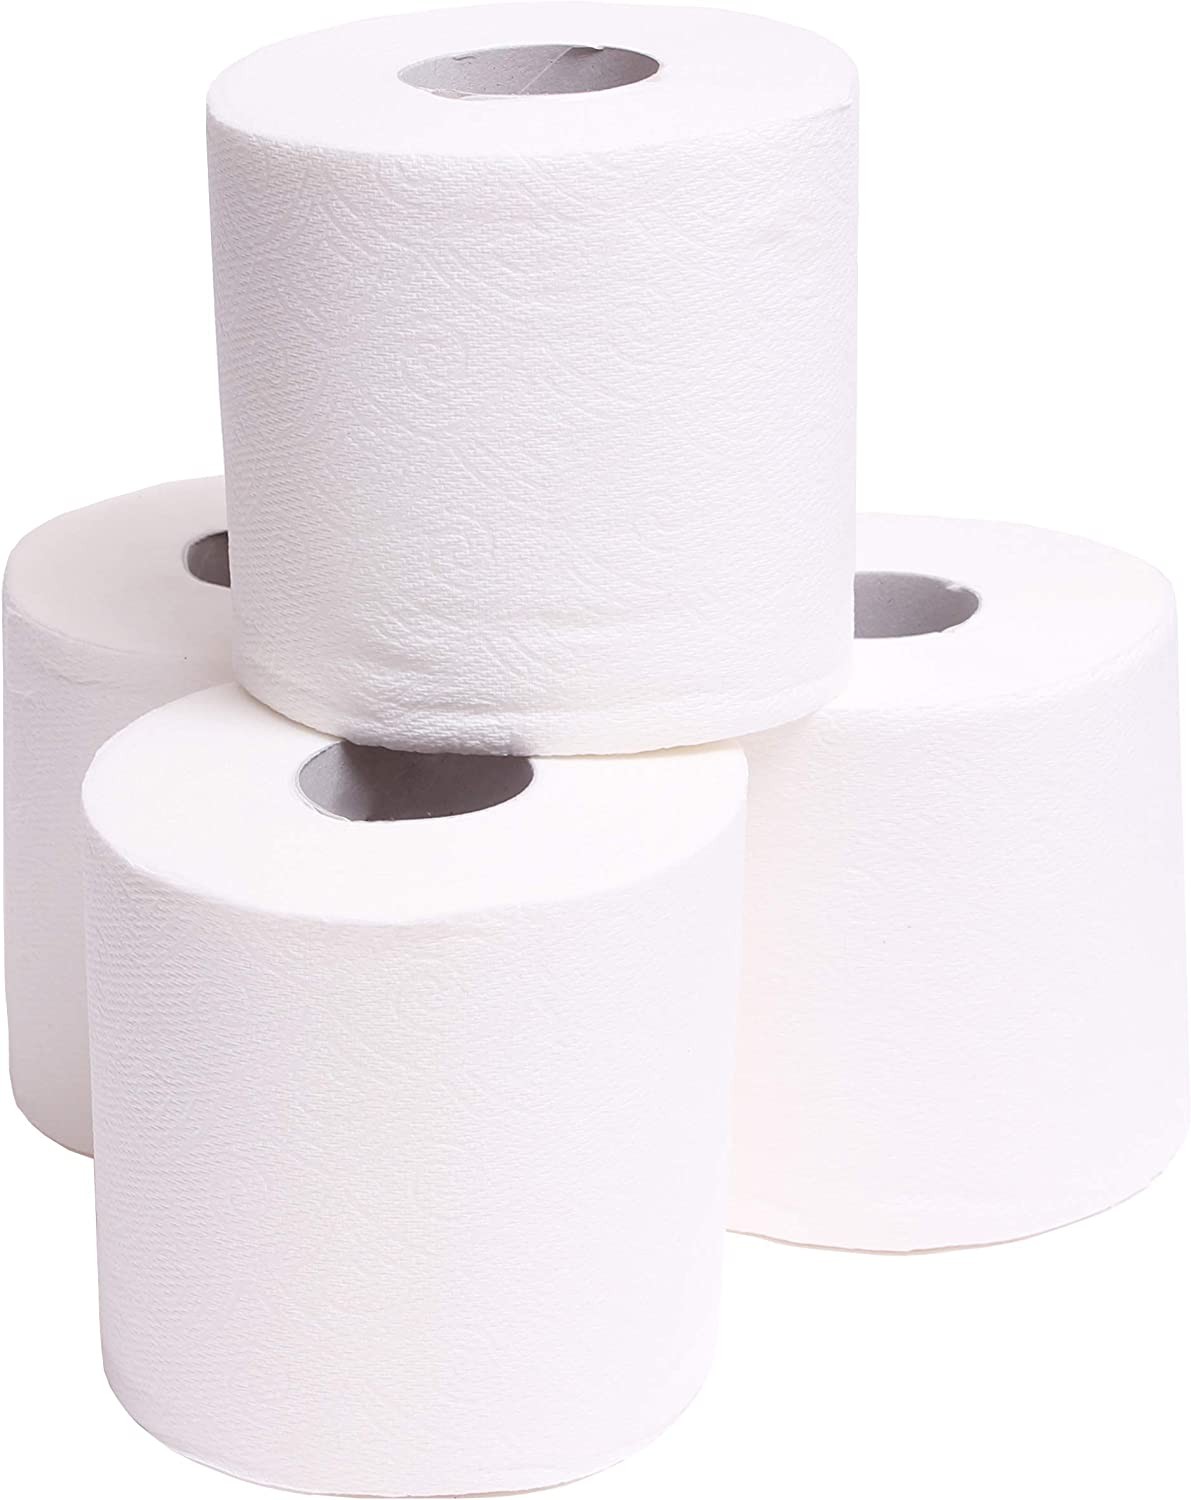 TigerChef 2-Ply Bathroom Tissue - 4 Rolls/carton